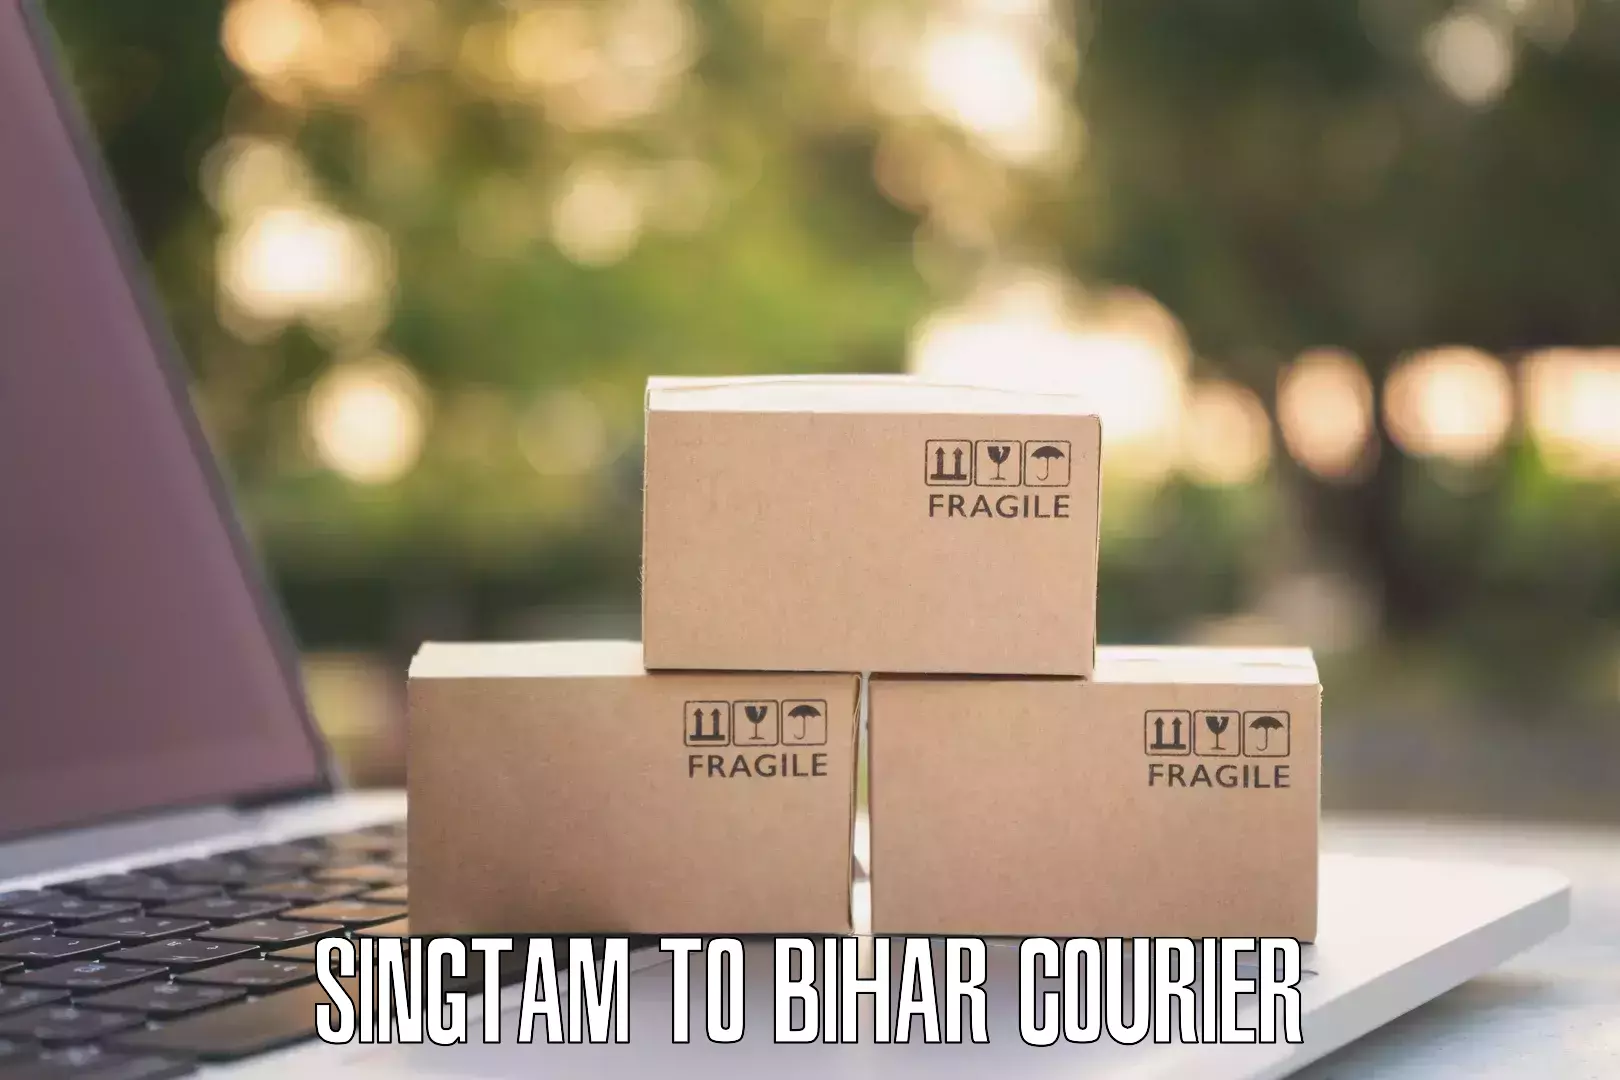 Global shipping networks Singtam to Bihar